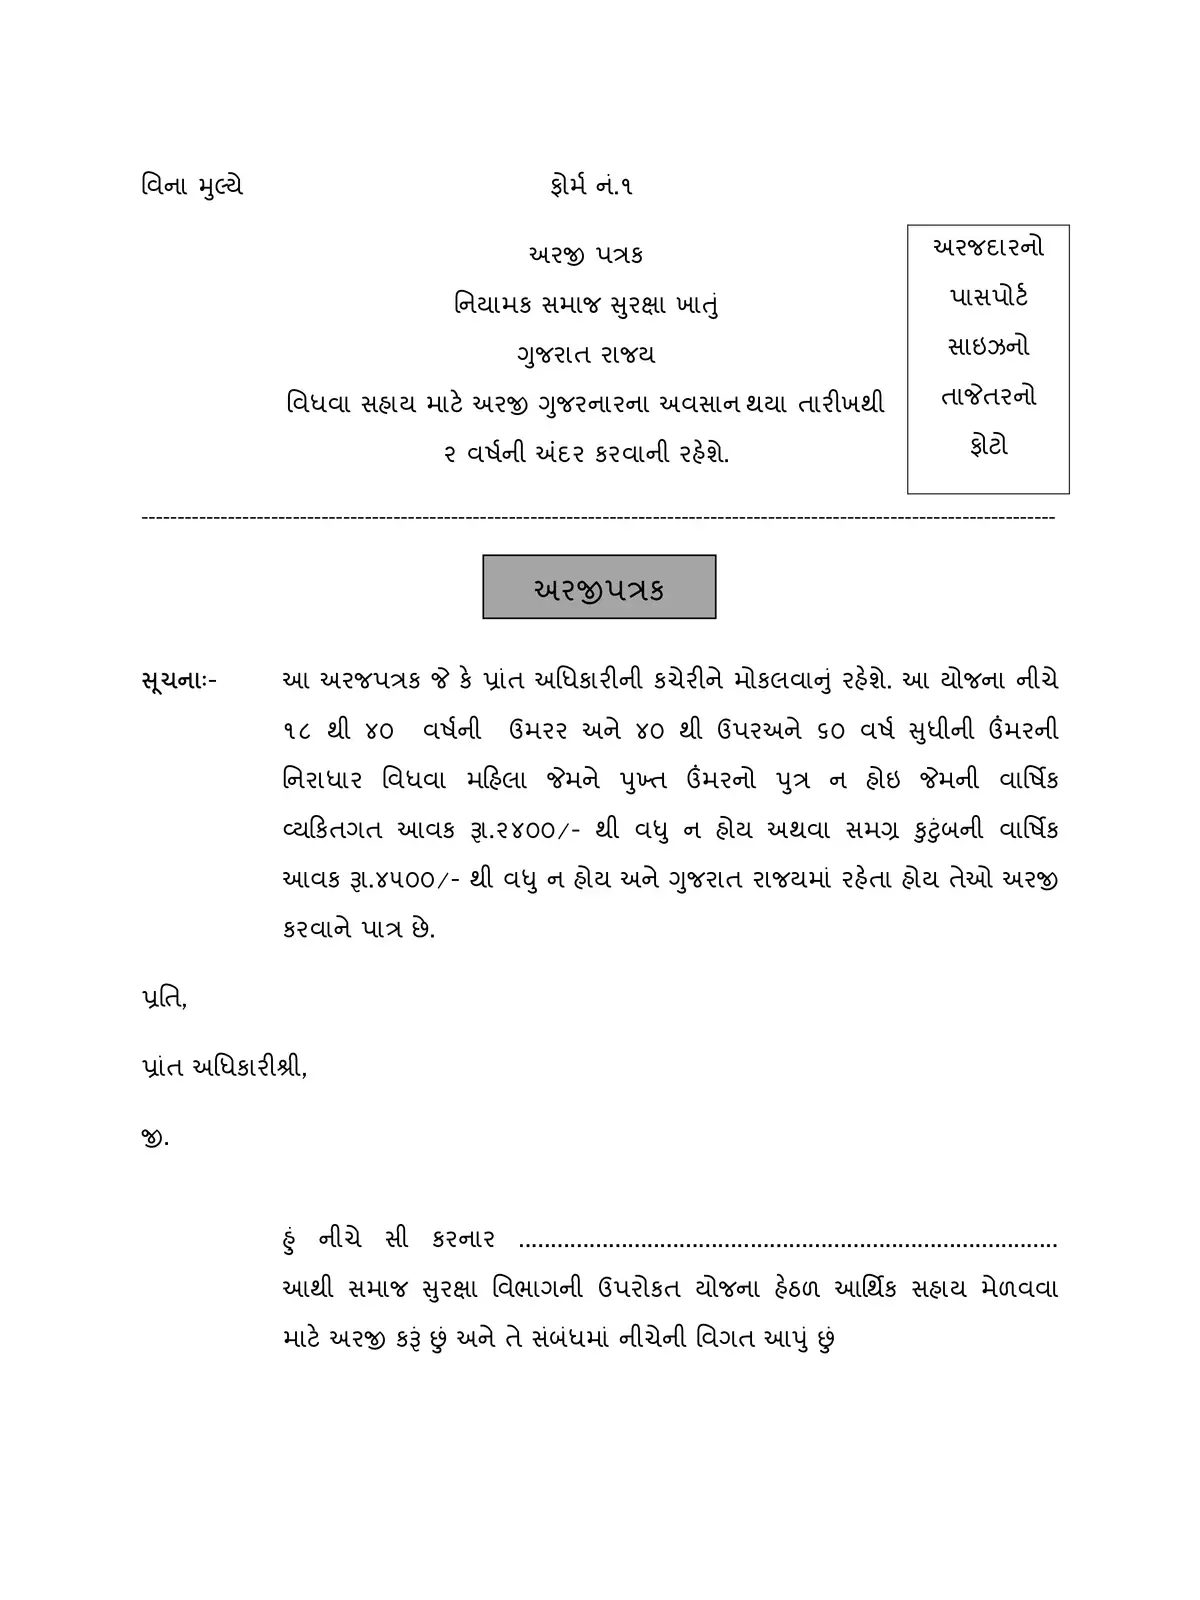 Gujarat Widow Assistance Application Form